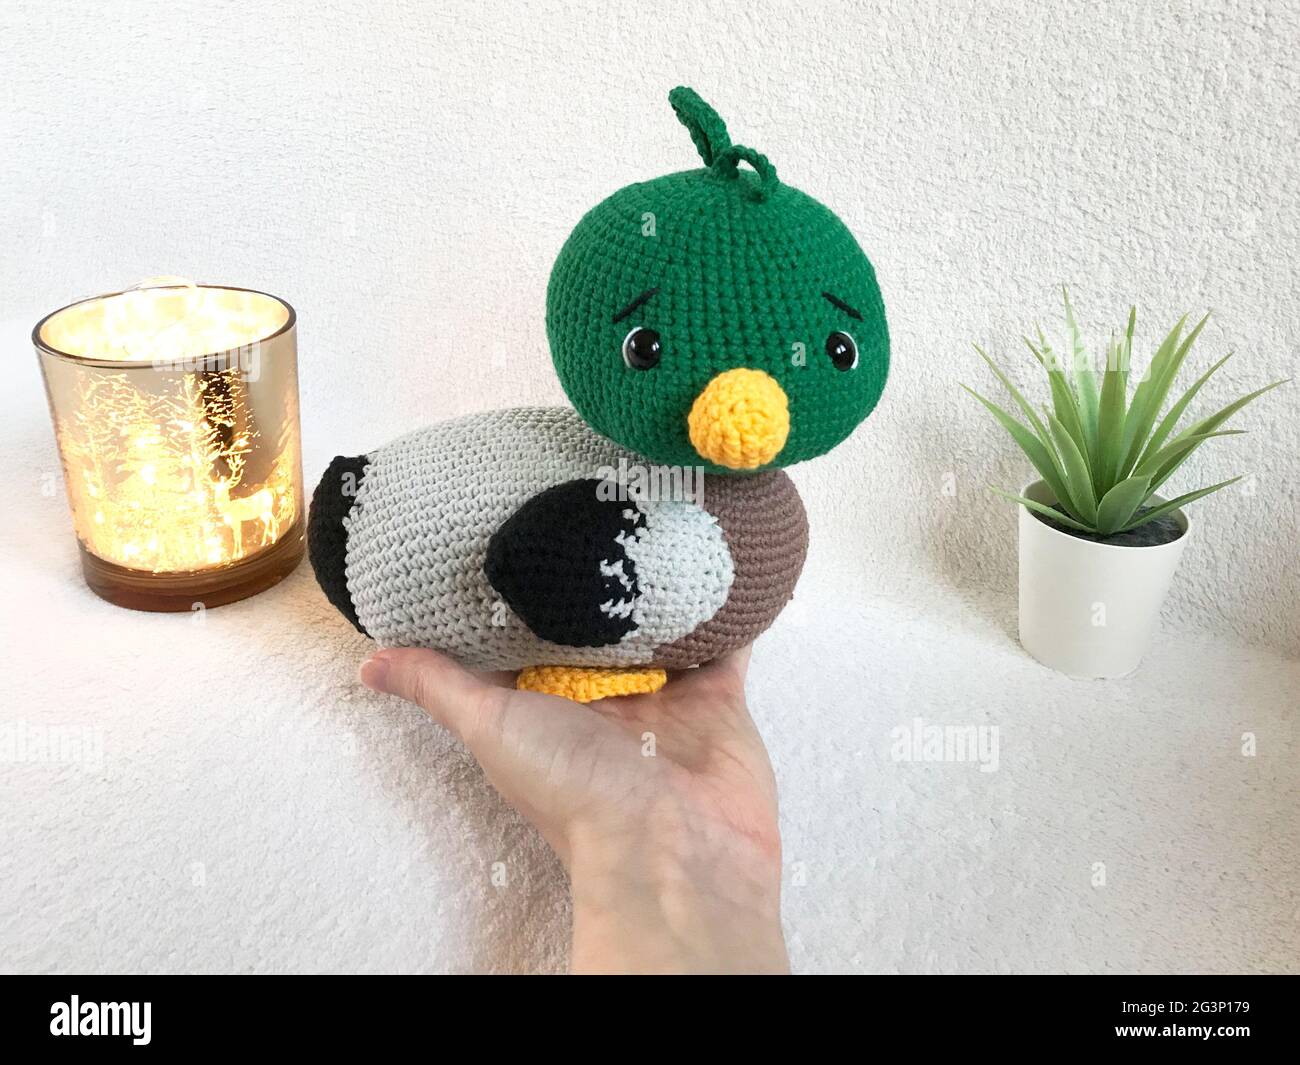 Jouet animal en crochet fait à la main - jouet en peluche Amigurumi - canard  colvert Photo Stock - Alamy